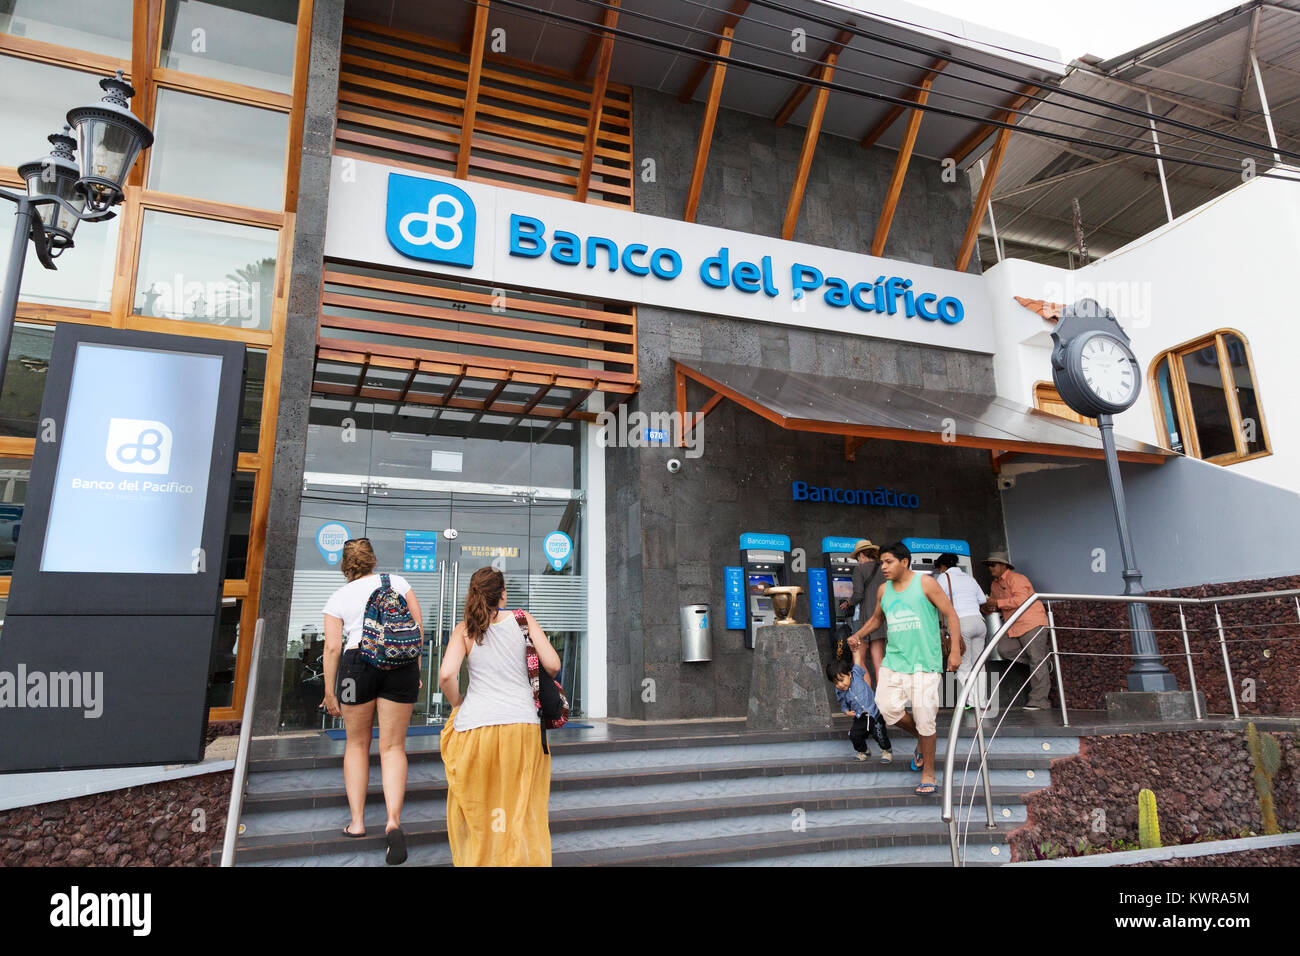 Galapagos Bank - people at the branch of the Banco del Pacifico, Puerto Ayora, Santa Cruz island, Galapagos islands, Ecuador South America Stock Photo